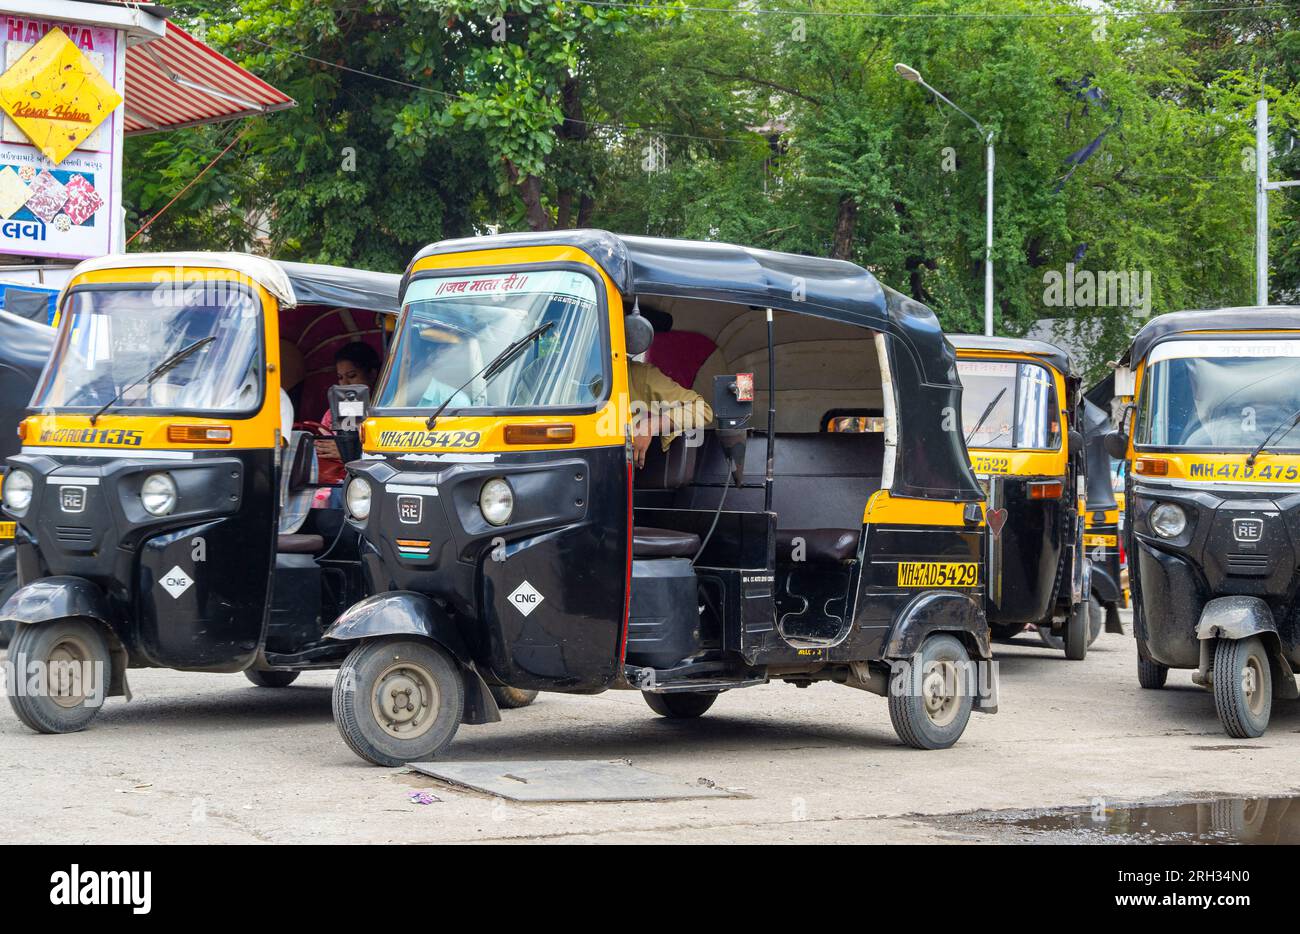 MUMBAI - SEPT 24: Traditional Black and Yellow Auto rickshaw or Tuk-Tuk waiting for passengers in a street in Mumbai on September 24. 2022, India Stock Photo